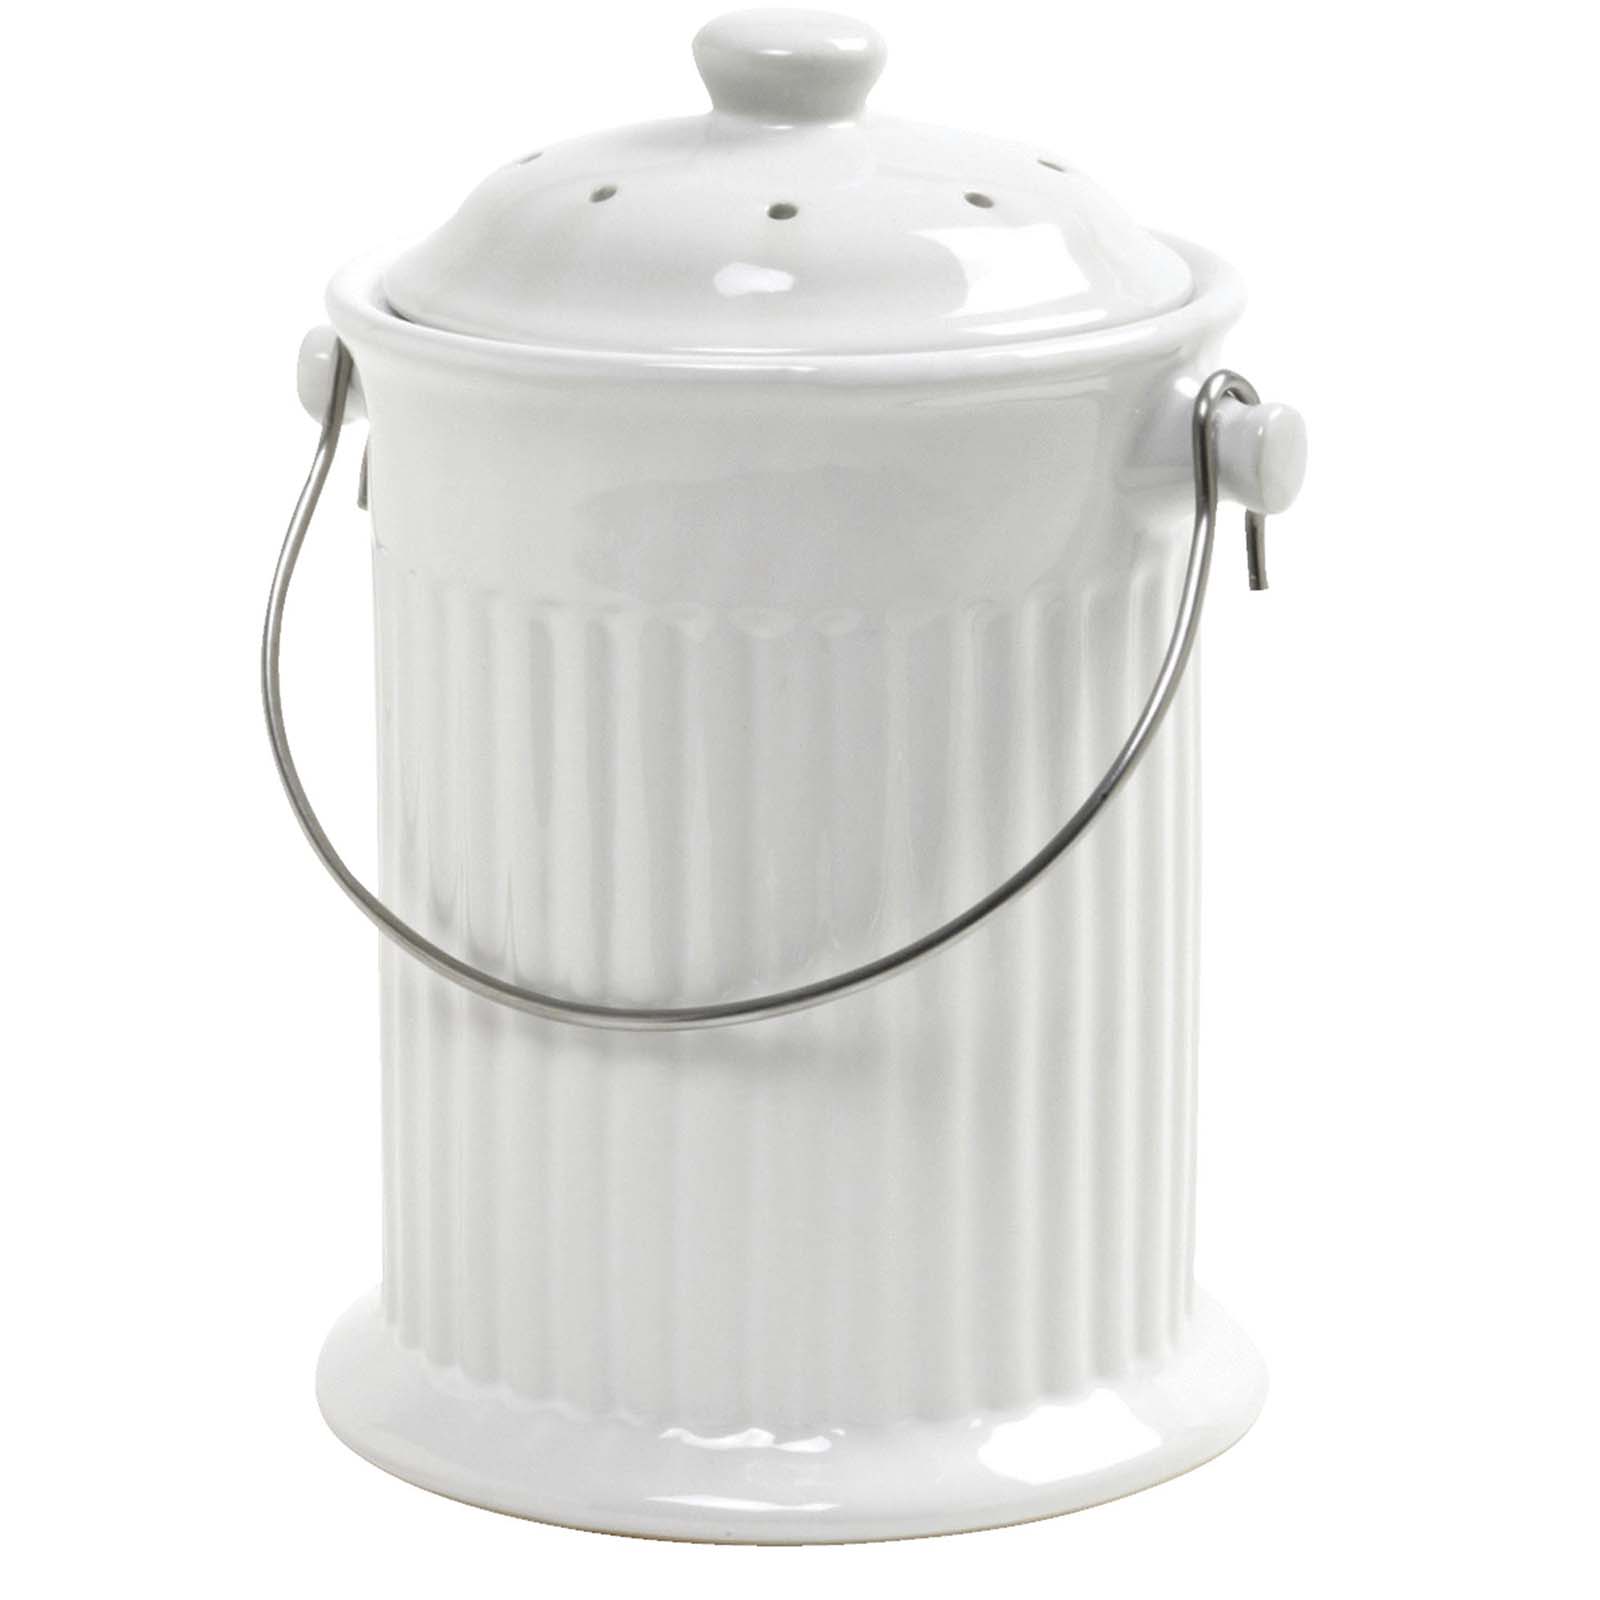 NorPro 93 1gal Ceramic Compost Keeper - White